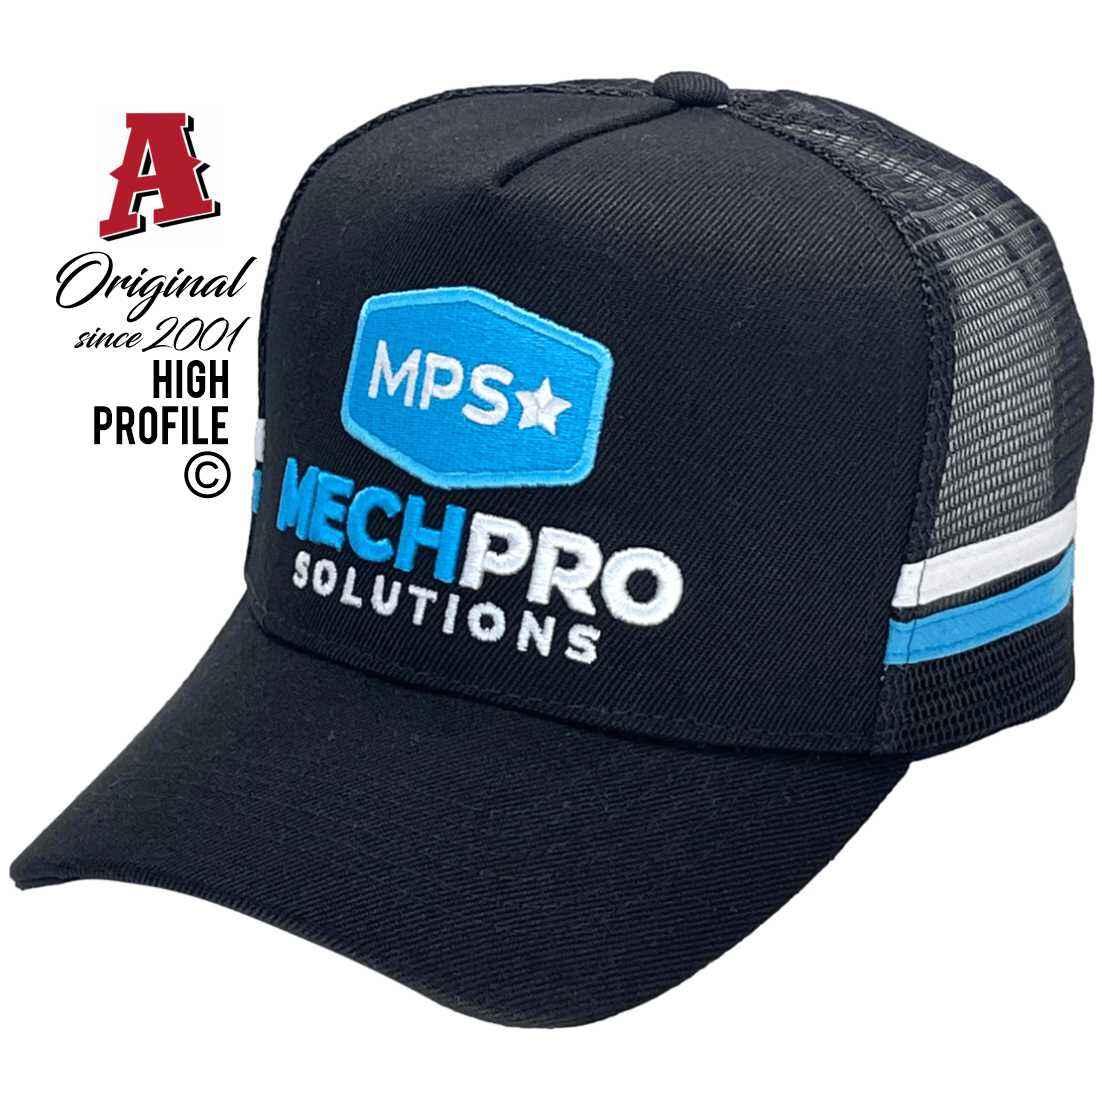 Mechpro Solutions Beresfield NSW Basic Aussie Trucker Hats with Australian HeadFit Crown Double SideBands Black Snapback